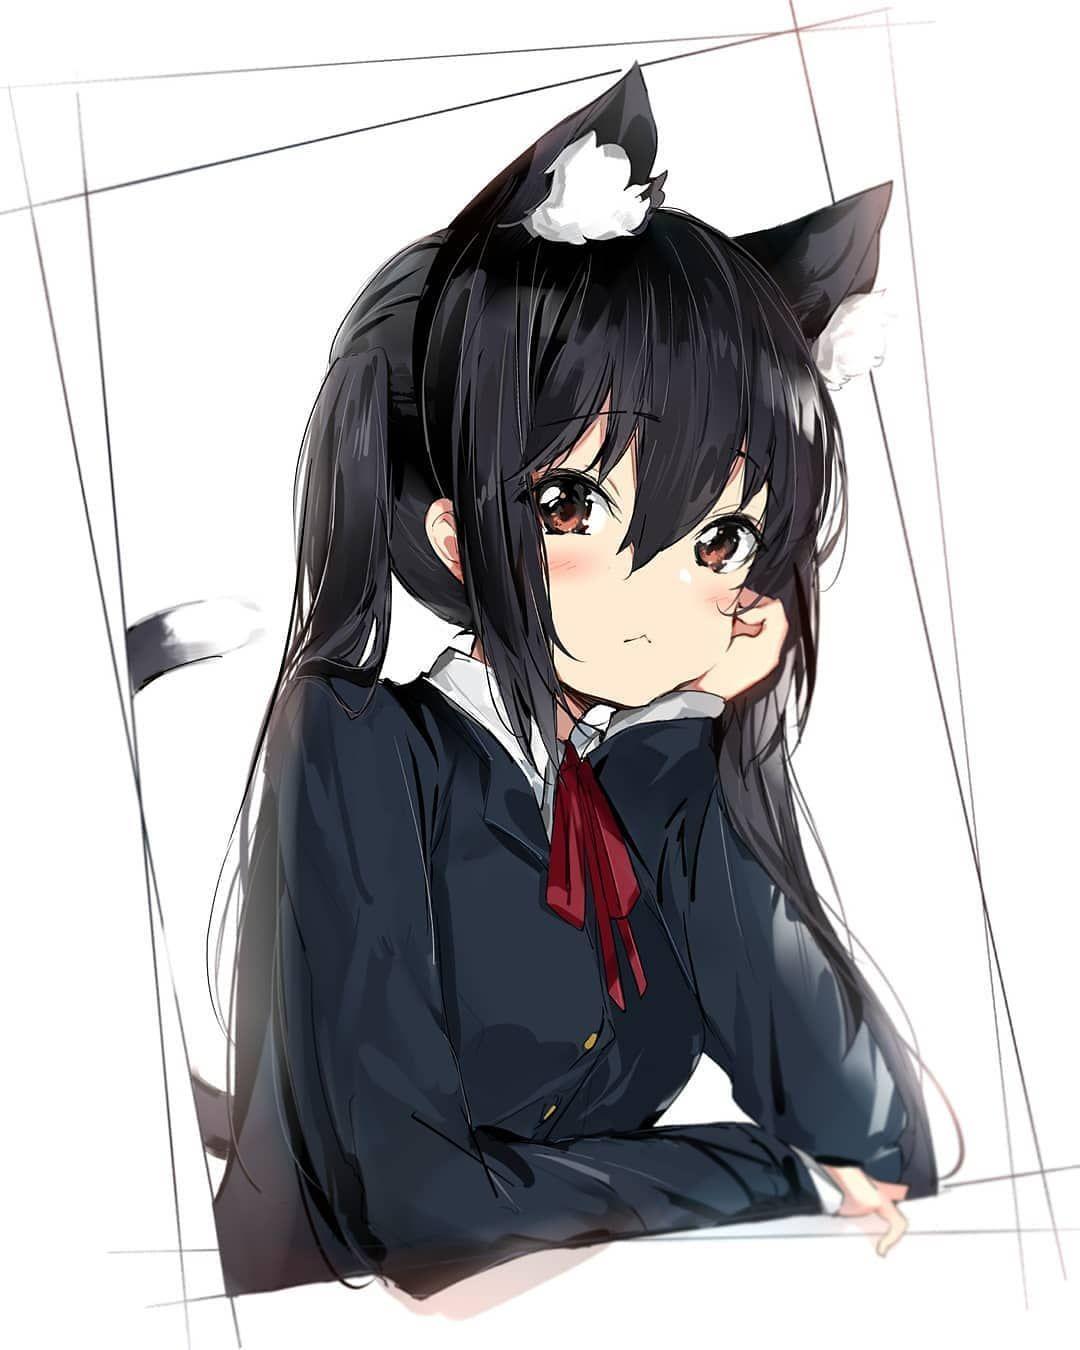 Cute Anime Wolf Girl Wallpapers - Top Free Cute Anime Wolf Girl ...